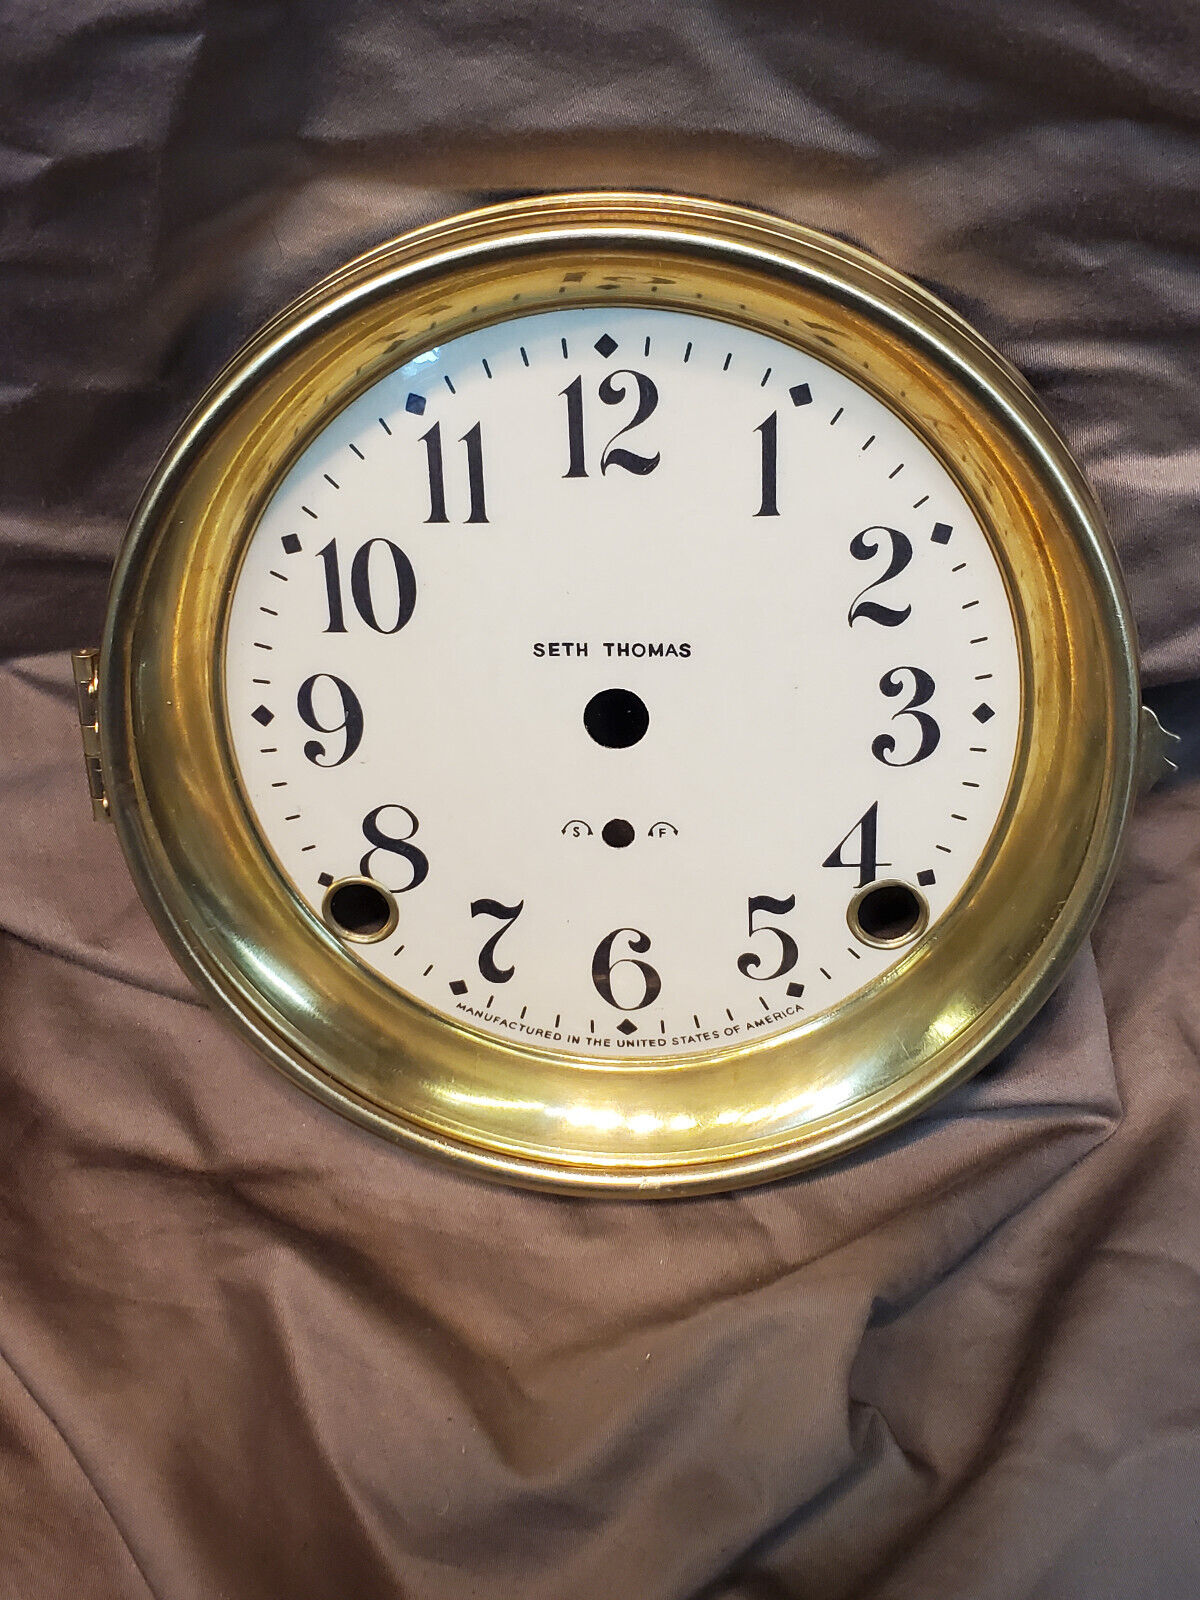 Restored Antique Seth Thomas Clock Dial and Bezel Refurbished